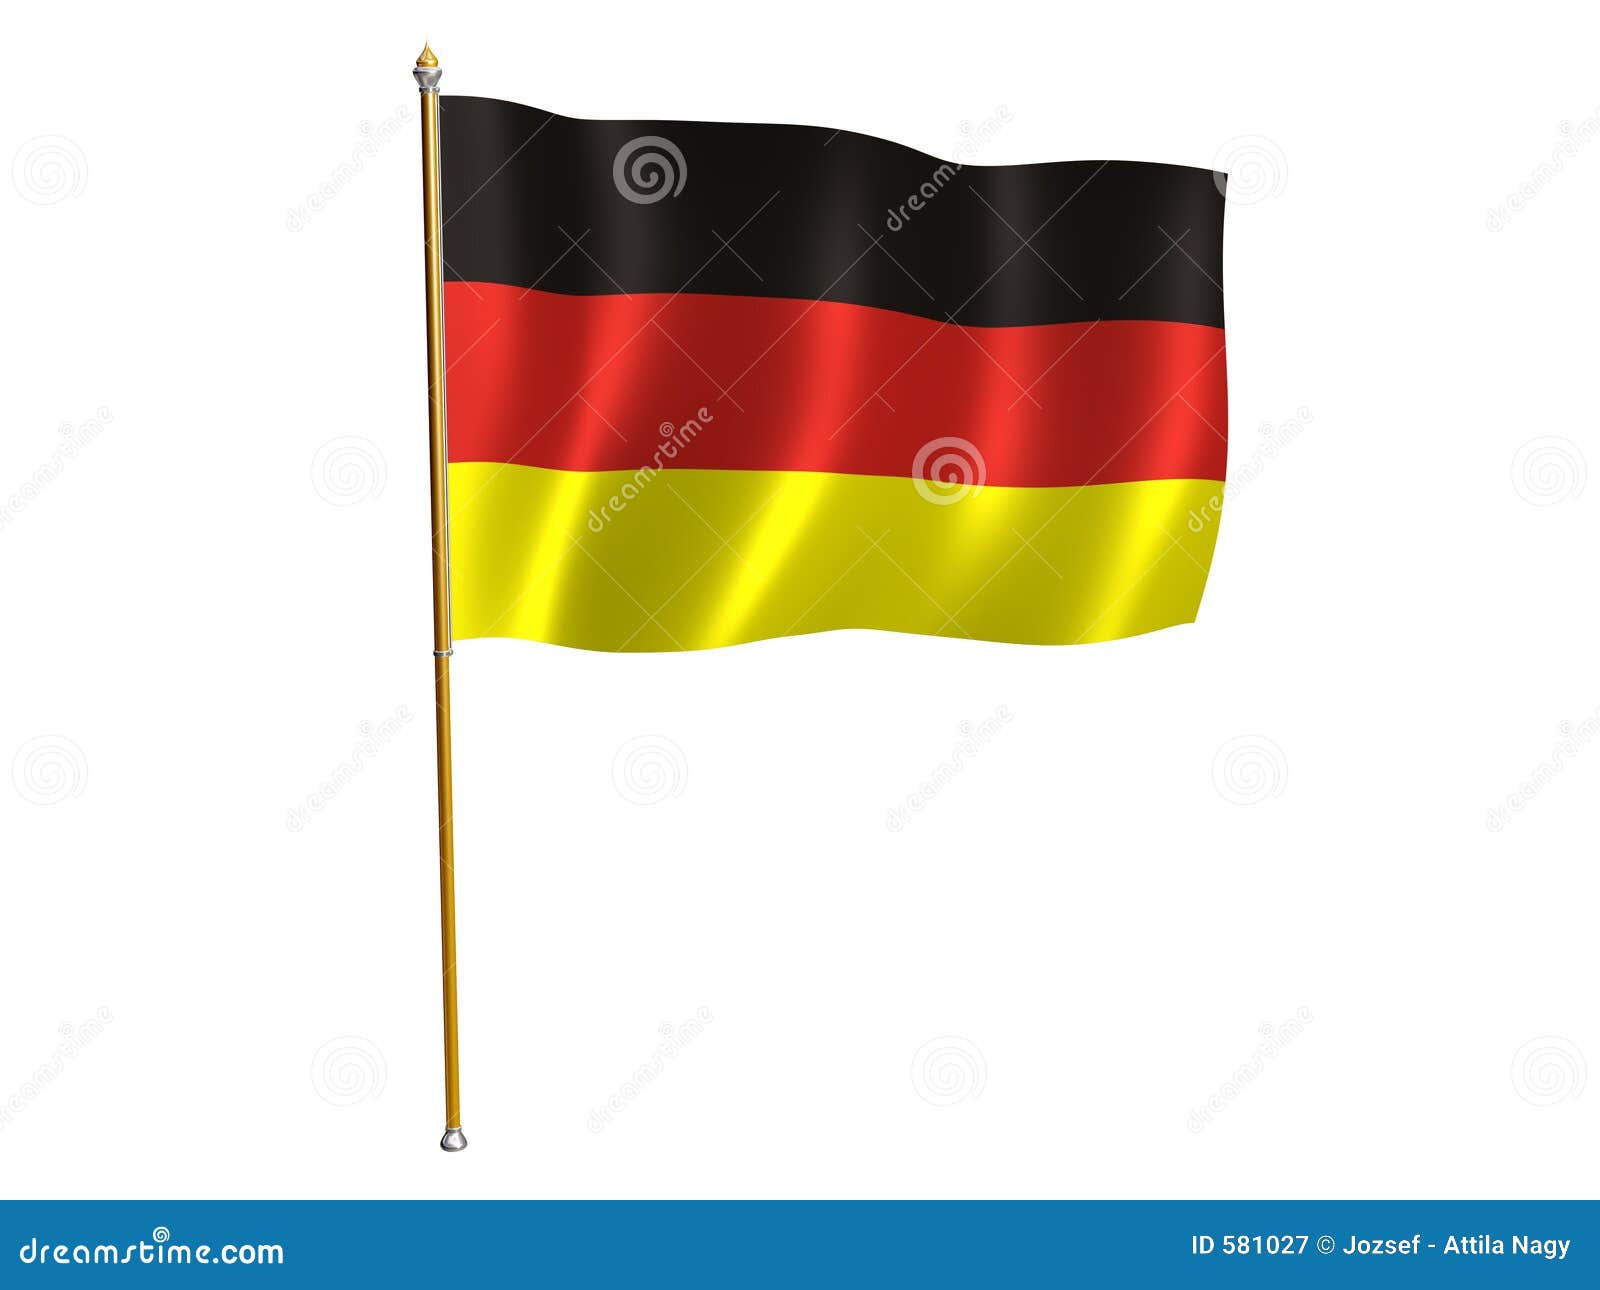 German silk flag stock illustration. Illustration of silk - 581027